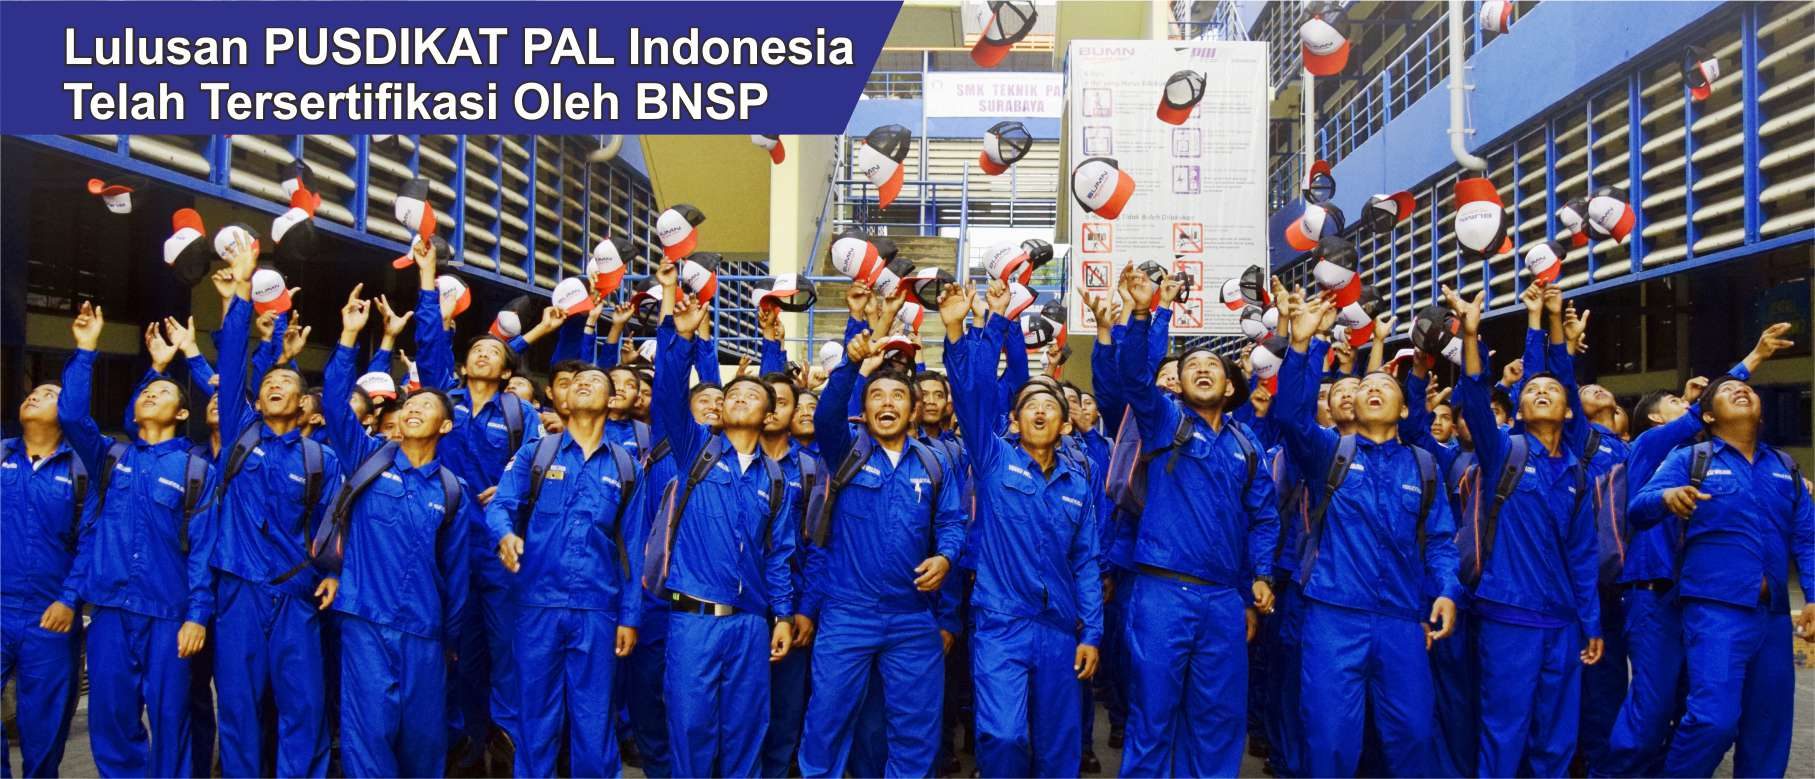 Lulusan PUSDIKLAT PAL Indonesia tersertifikasi BNSP